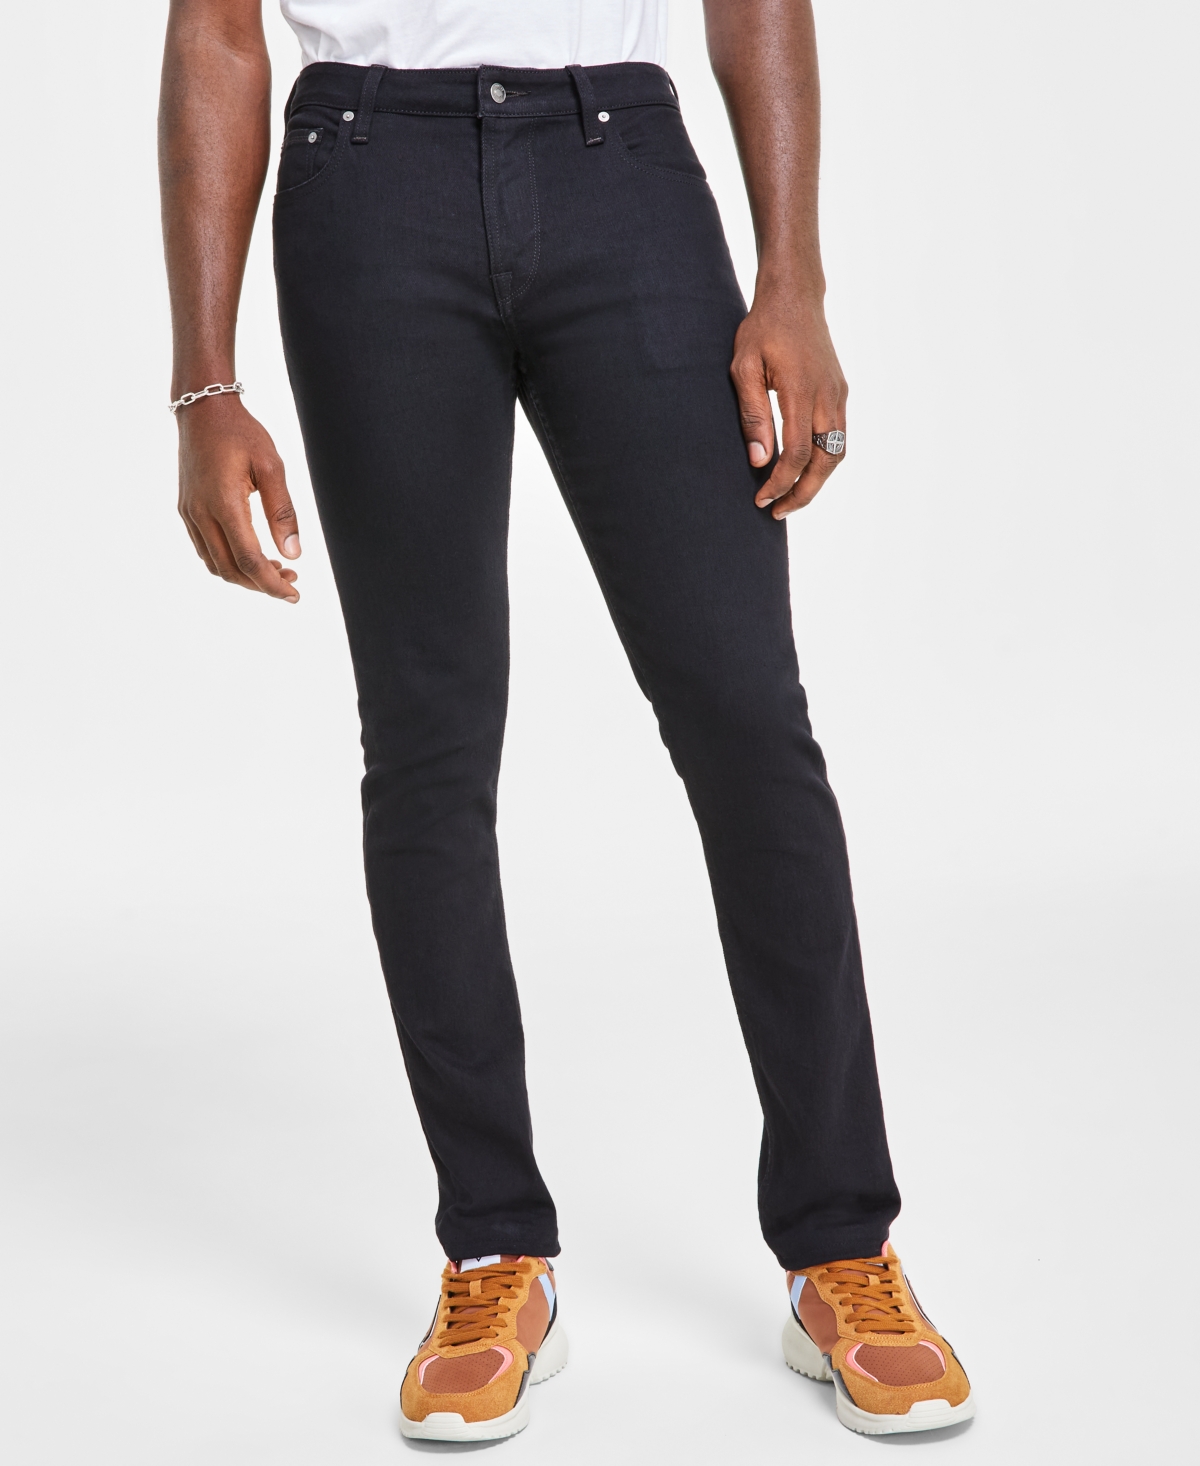 Men's Eco Slim Tapered Fit Jeans - Jailbreak Wash